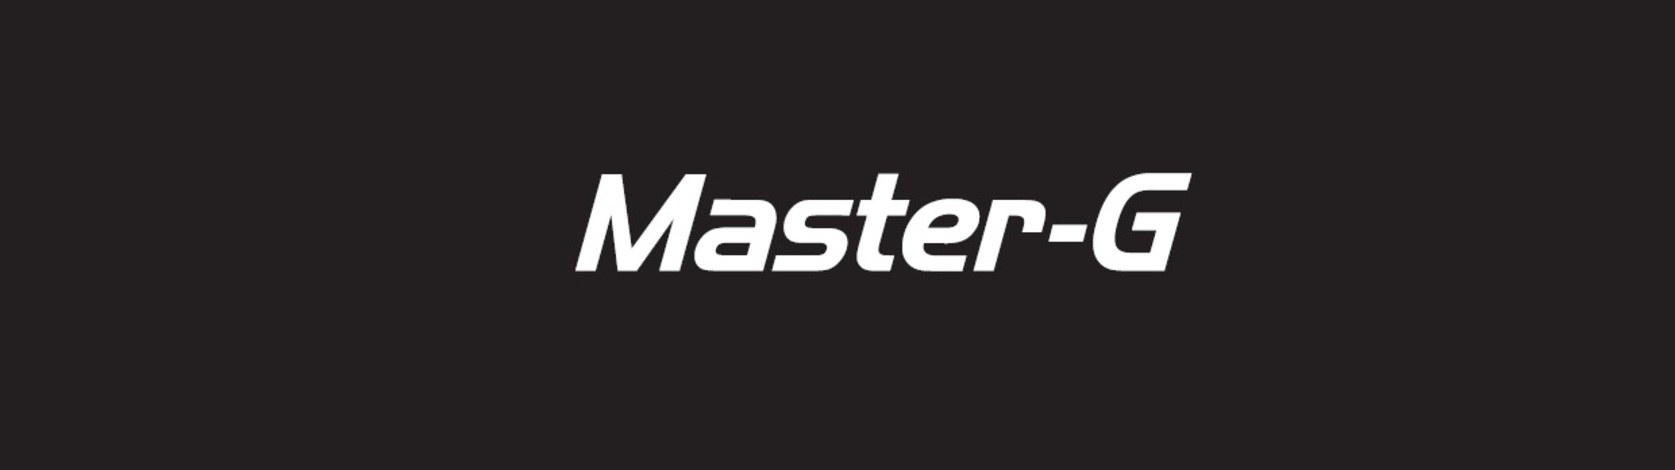 Reseña MasterG.jpg